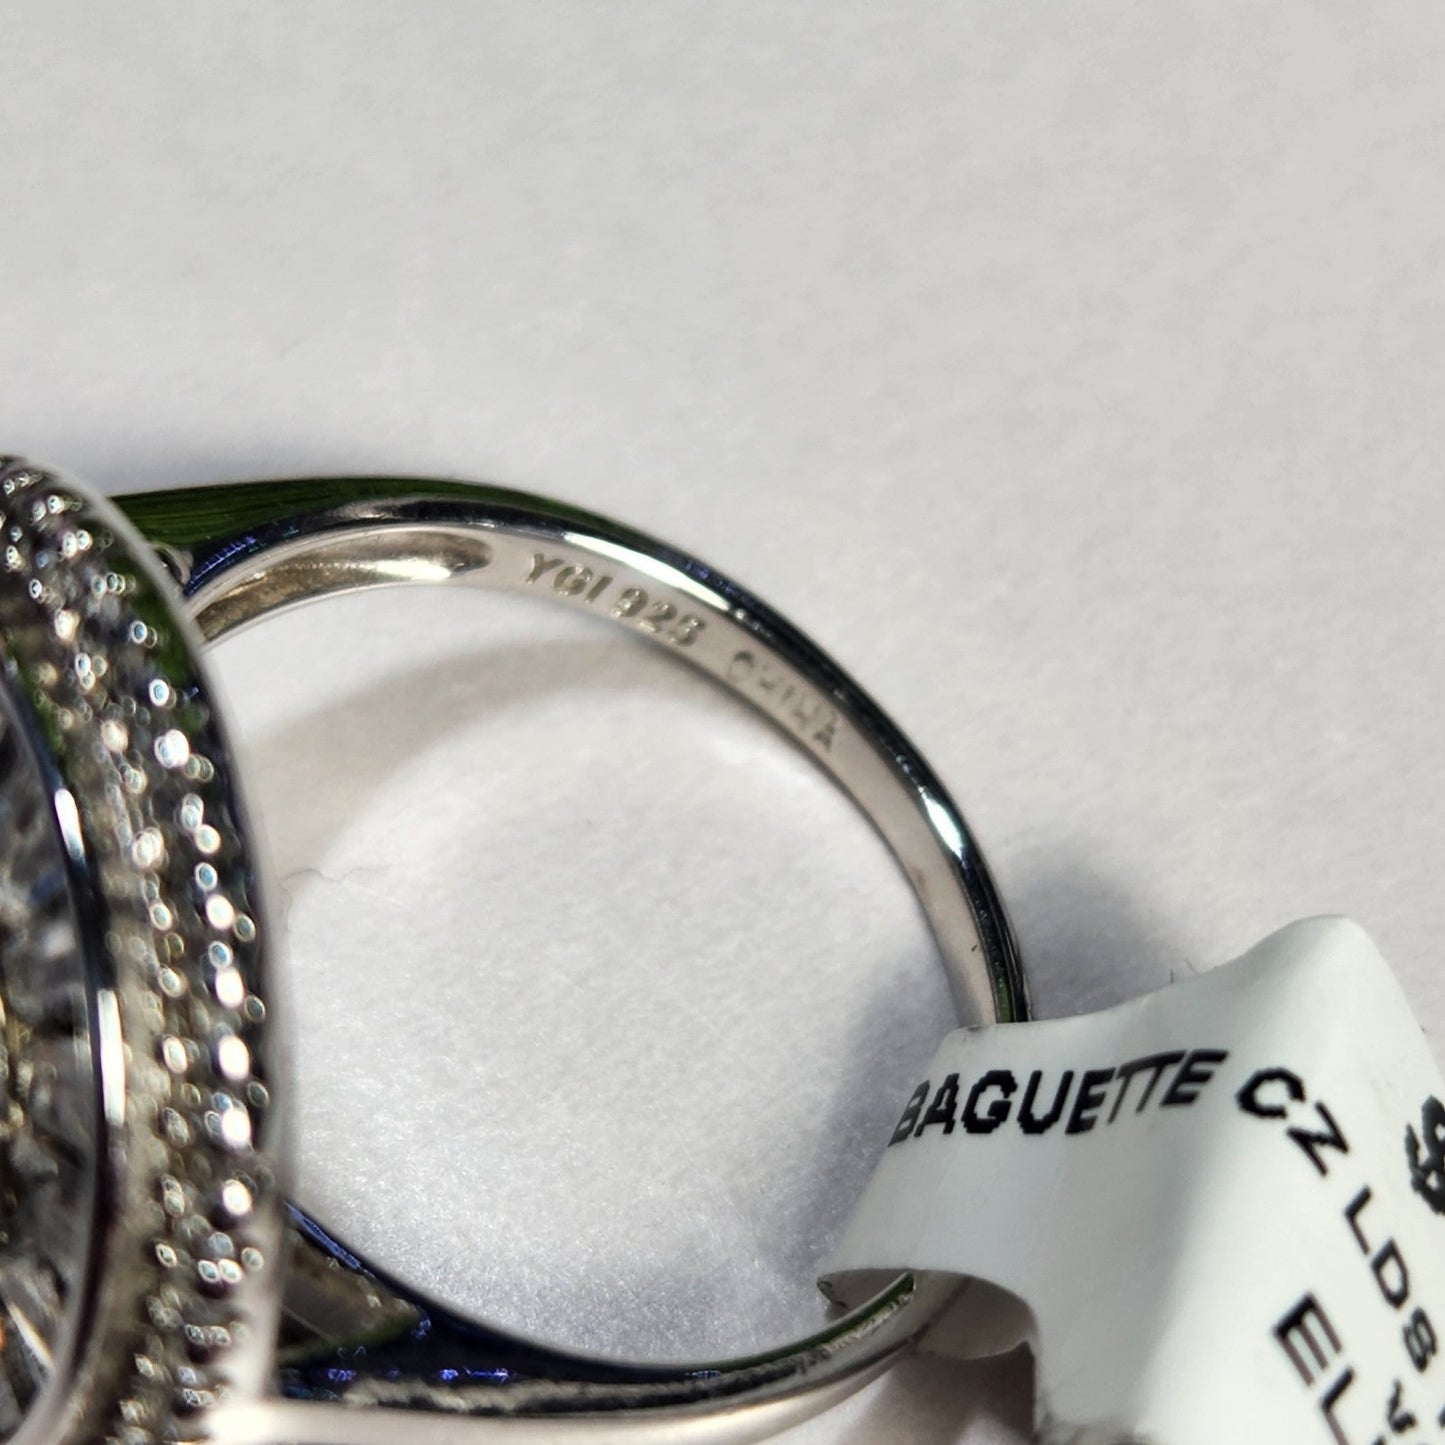 925 Sterling Silver Baguette Art Deco Ring